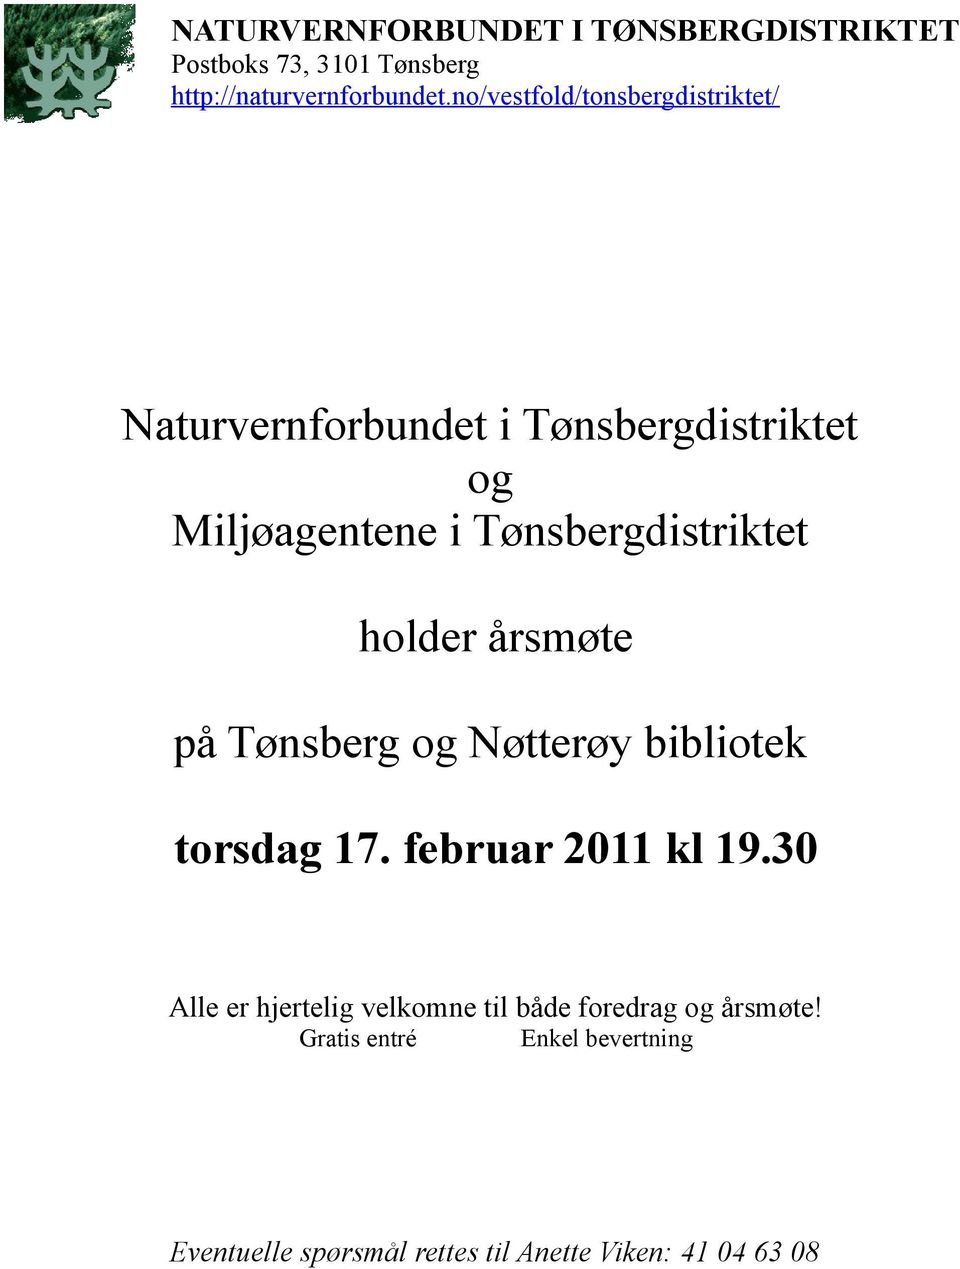 Tønsbergdistriktet holder årsmøte på Tønsberg og Nøtterøy bibliotek torsdag 17. februar 2011 kl 19.